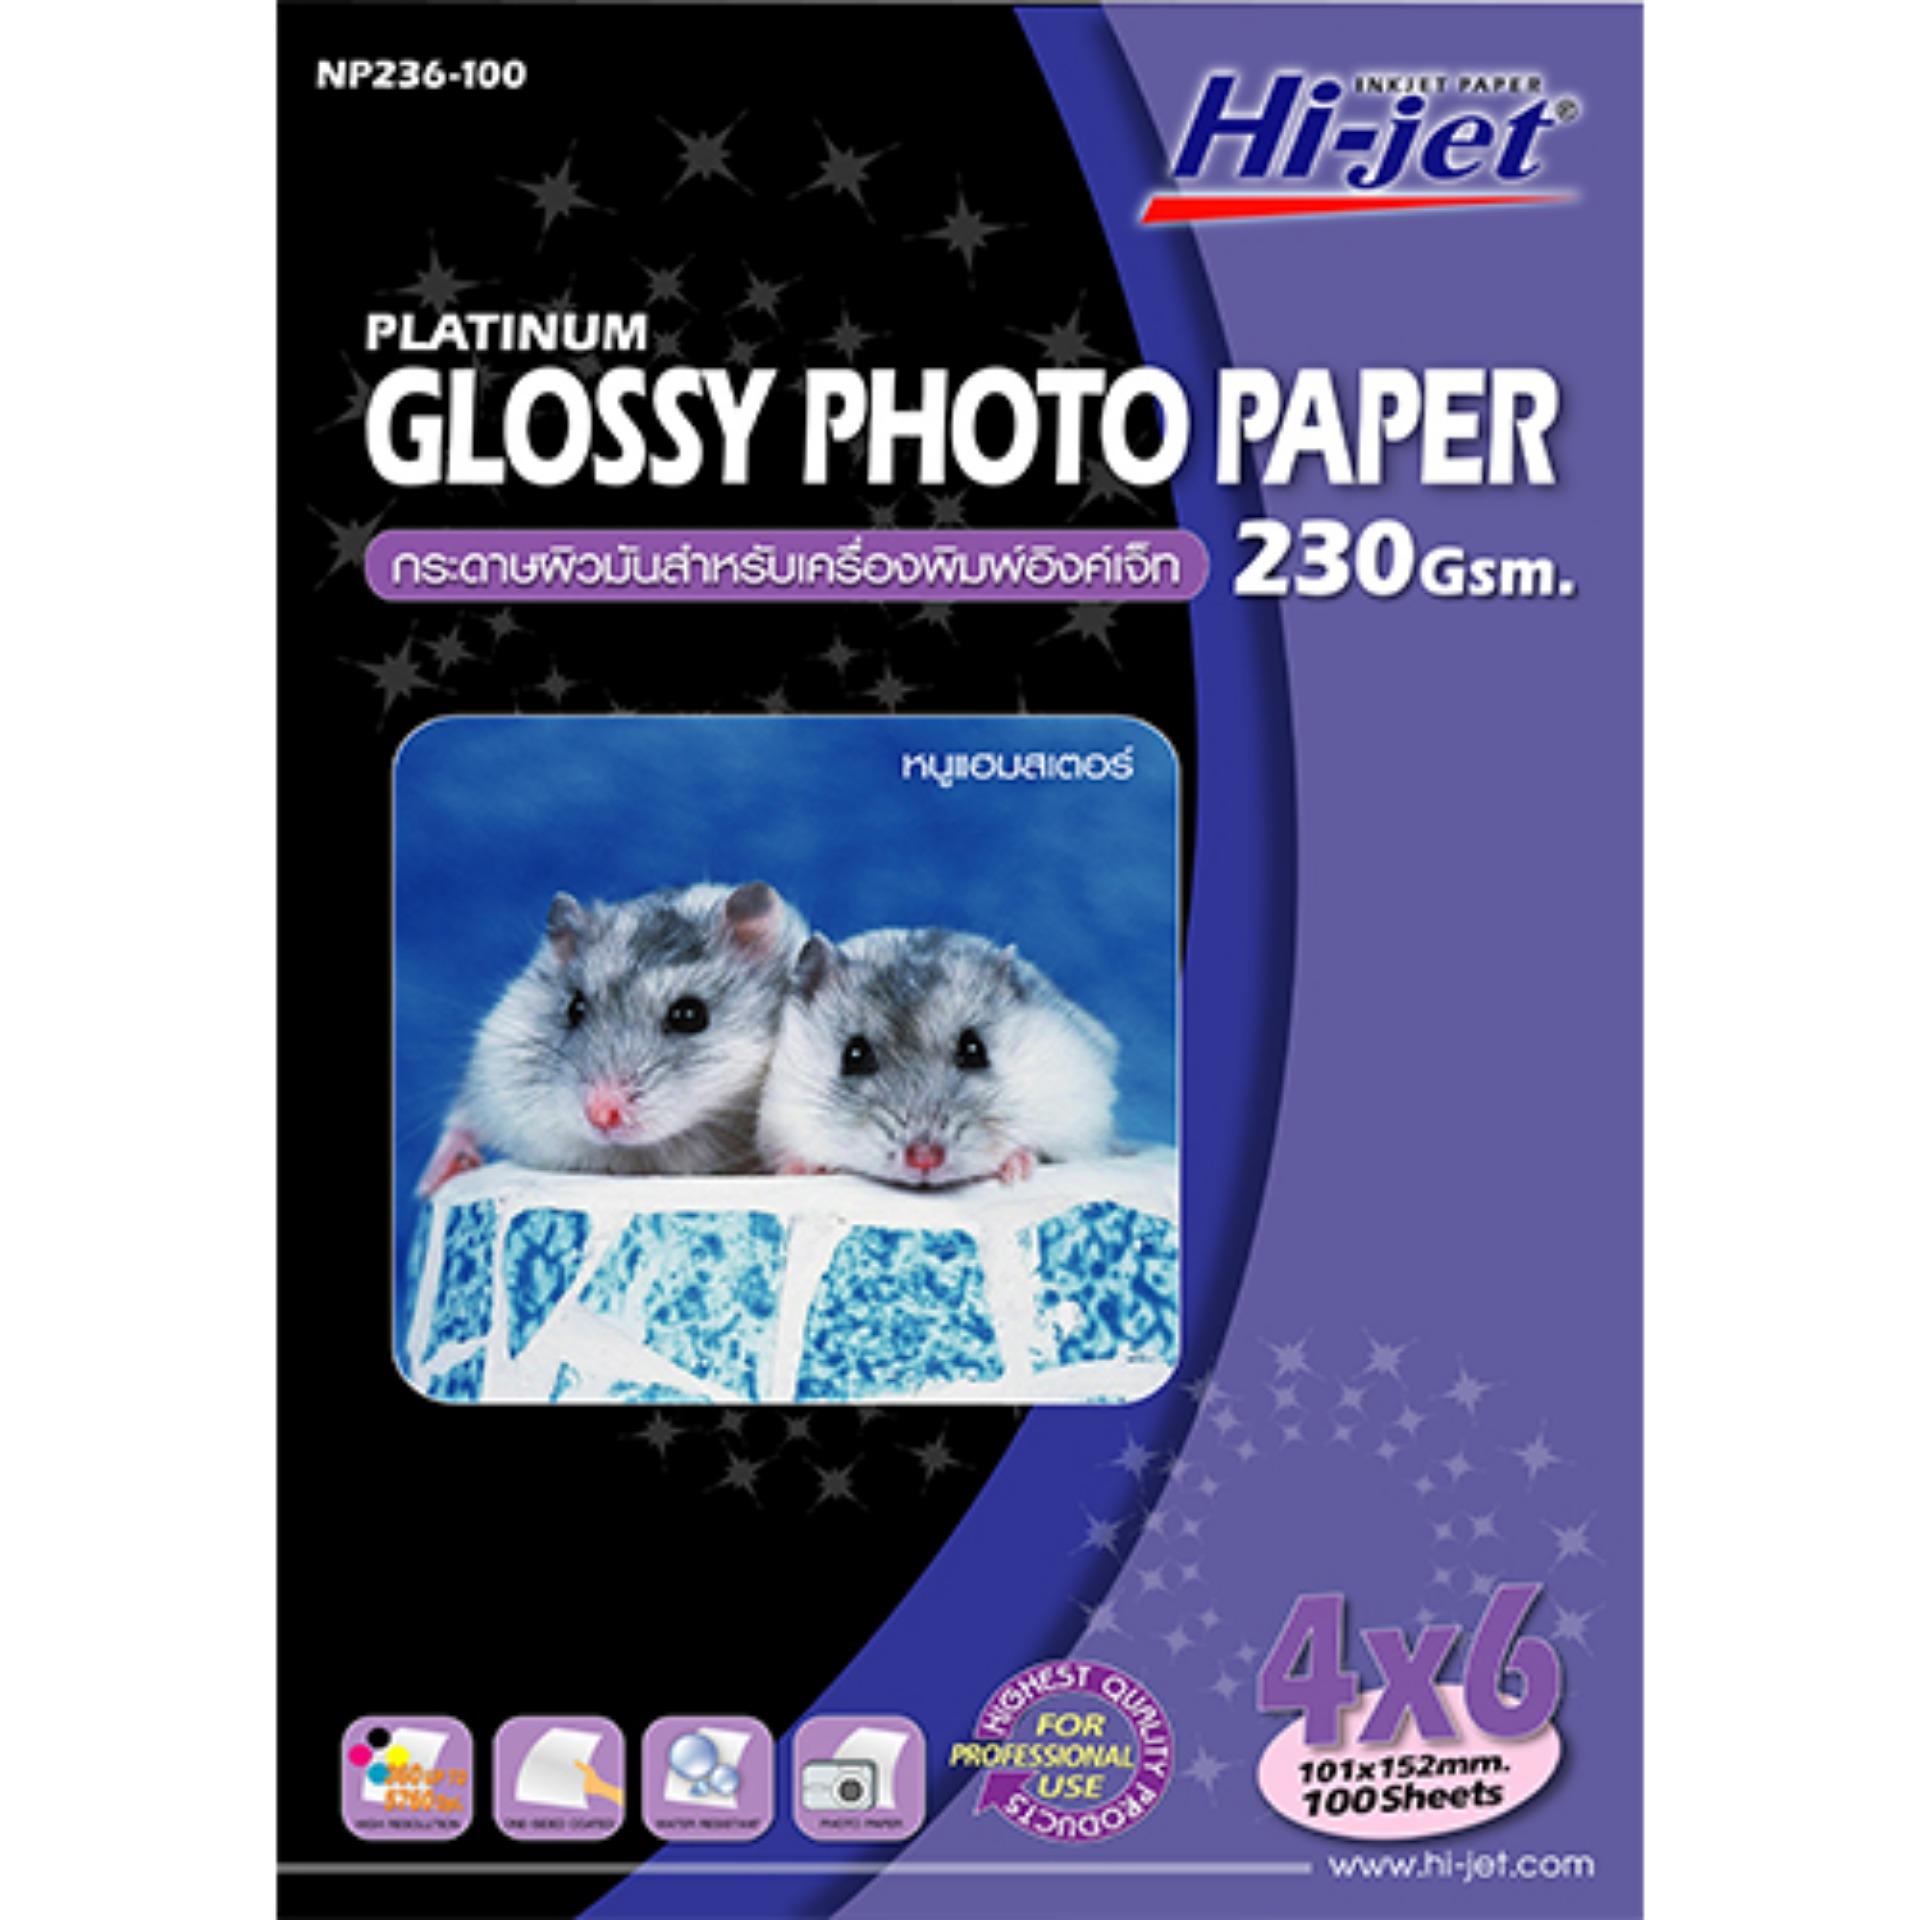 Hi-jet   PHOTO GLOSSY PAPERกระดาษเคลือบพิเศษผิวมันเงา230แกรม.  4x6 นิ้ว   ( 100  Sheets )